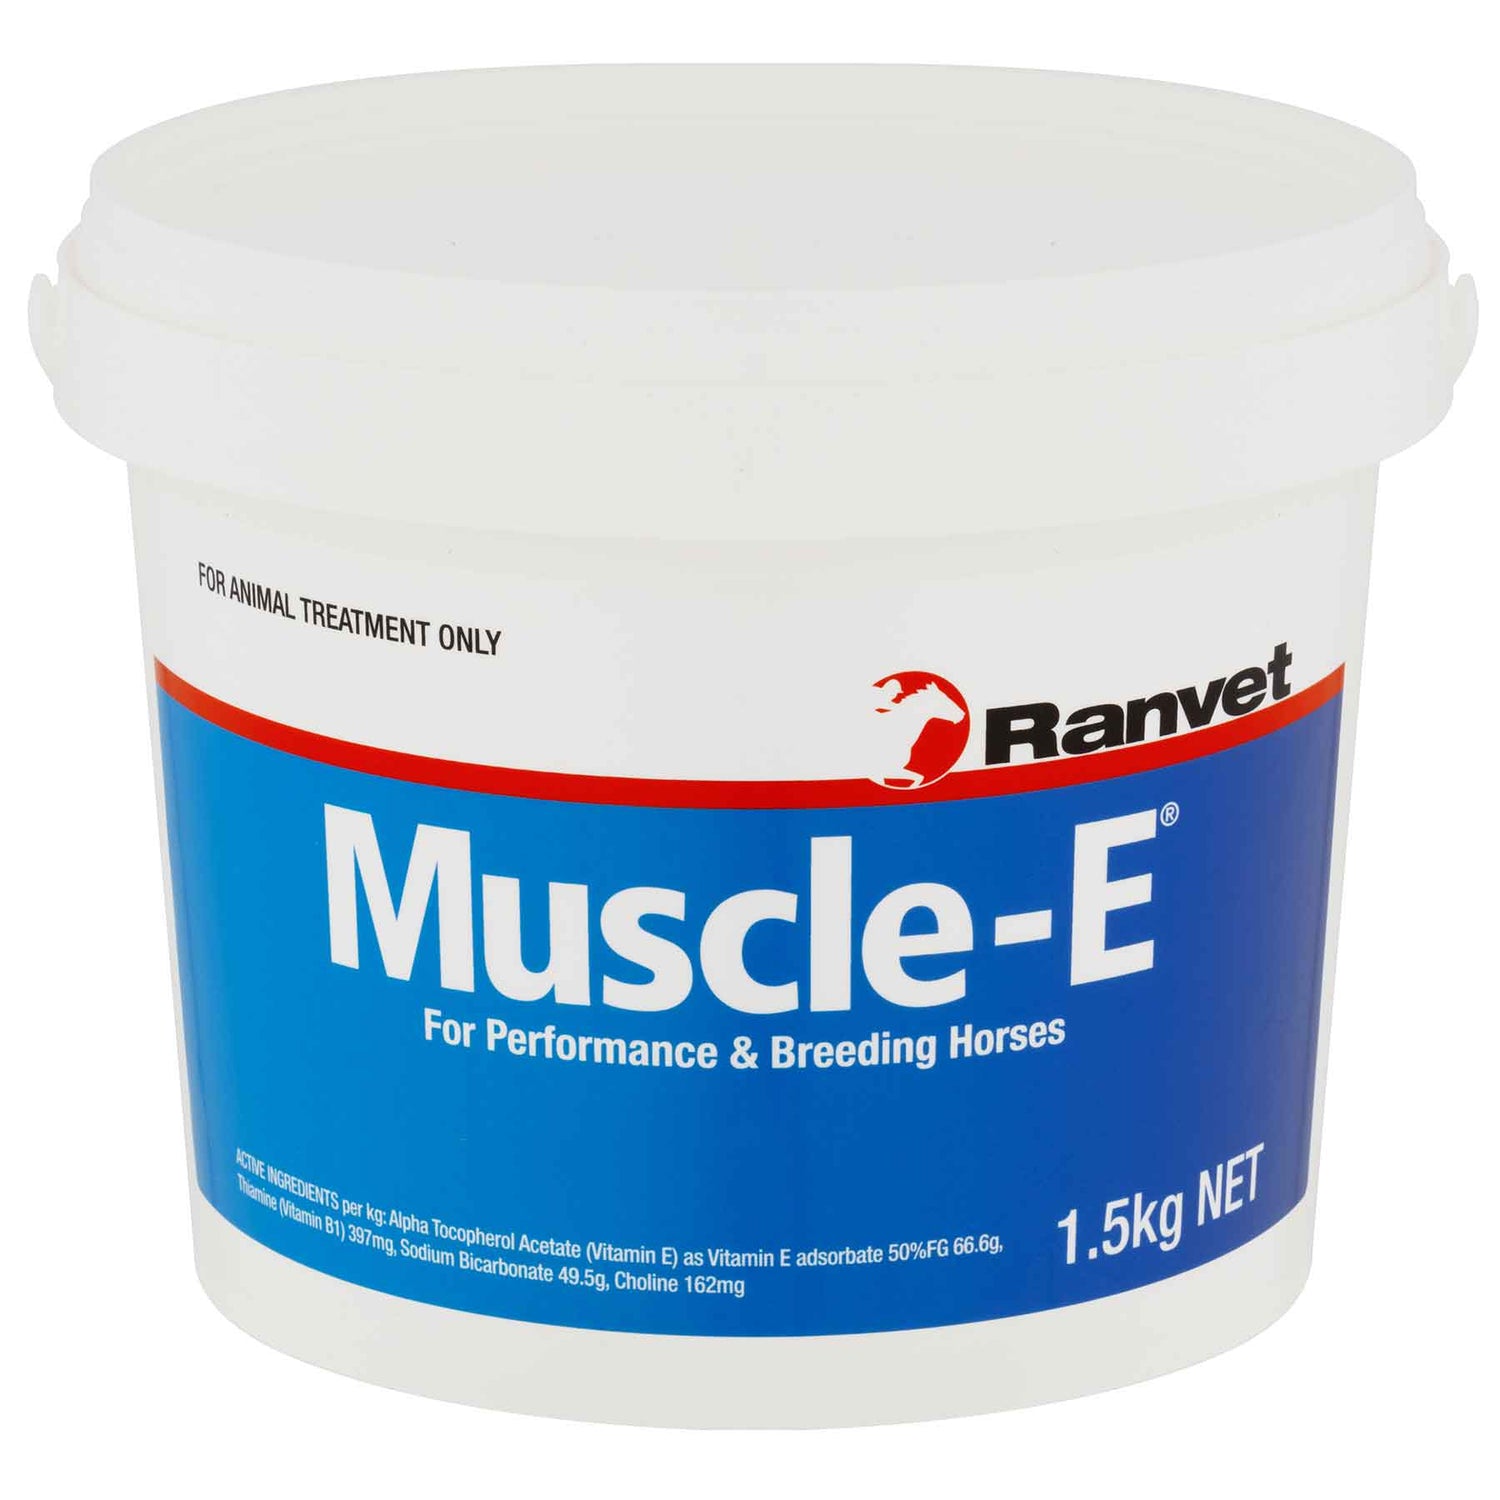 Muscle E 1.5kg - (Ranvet)